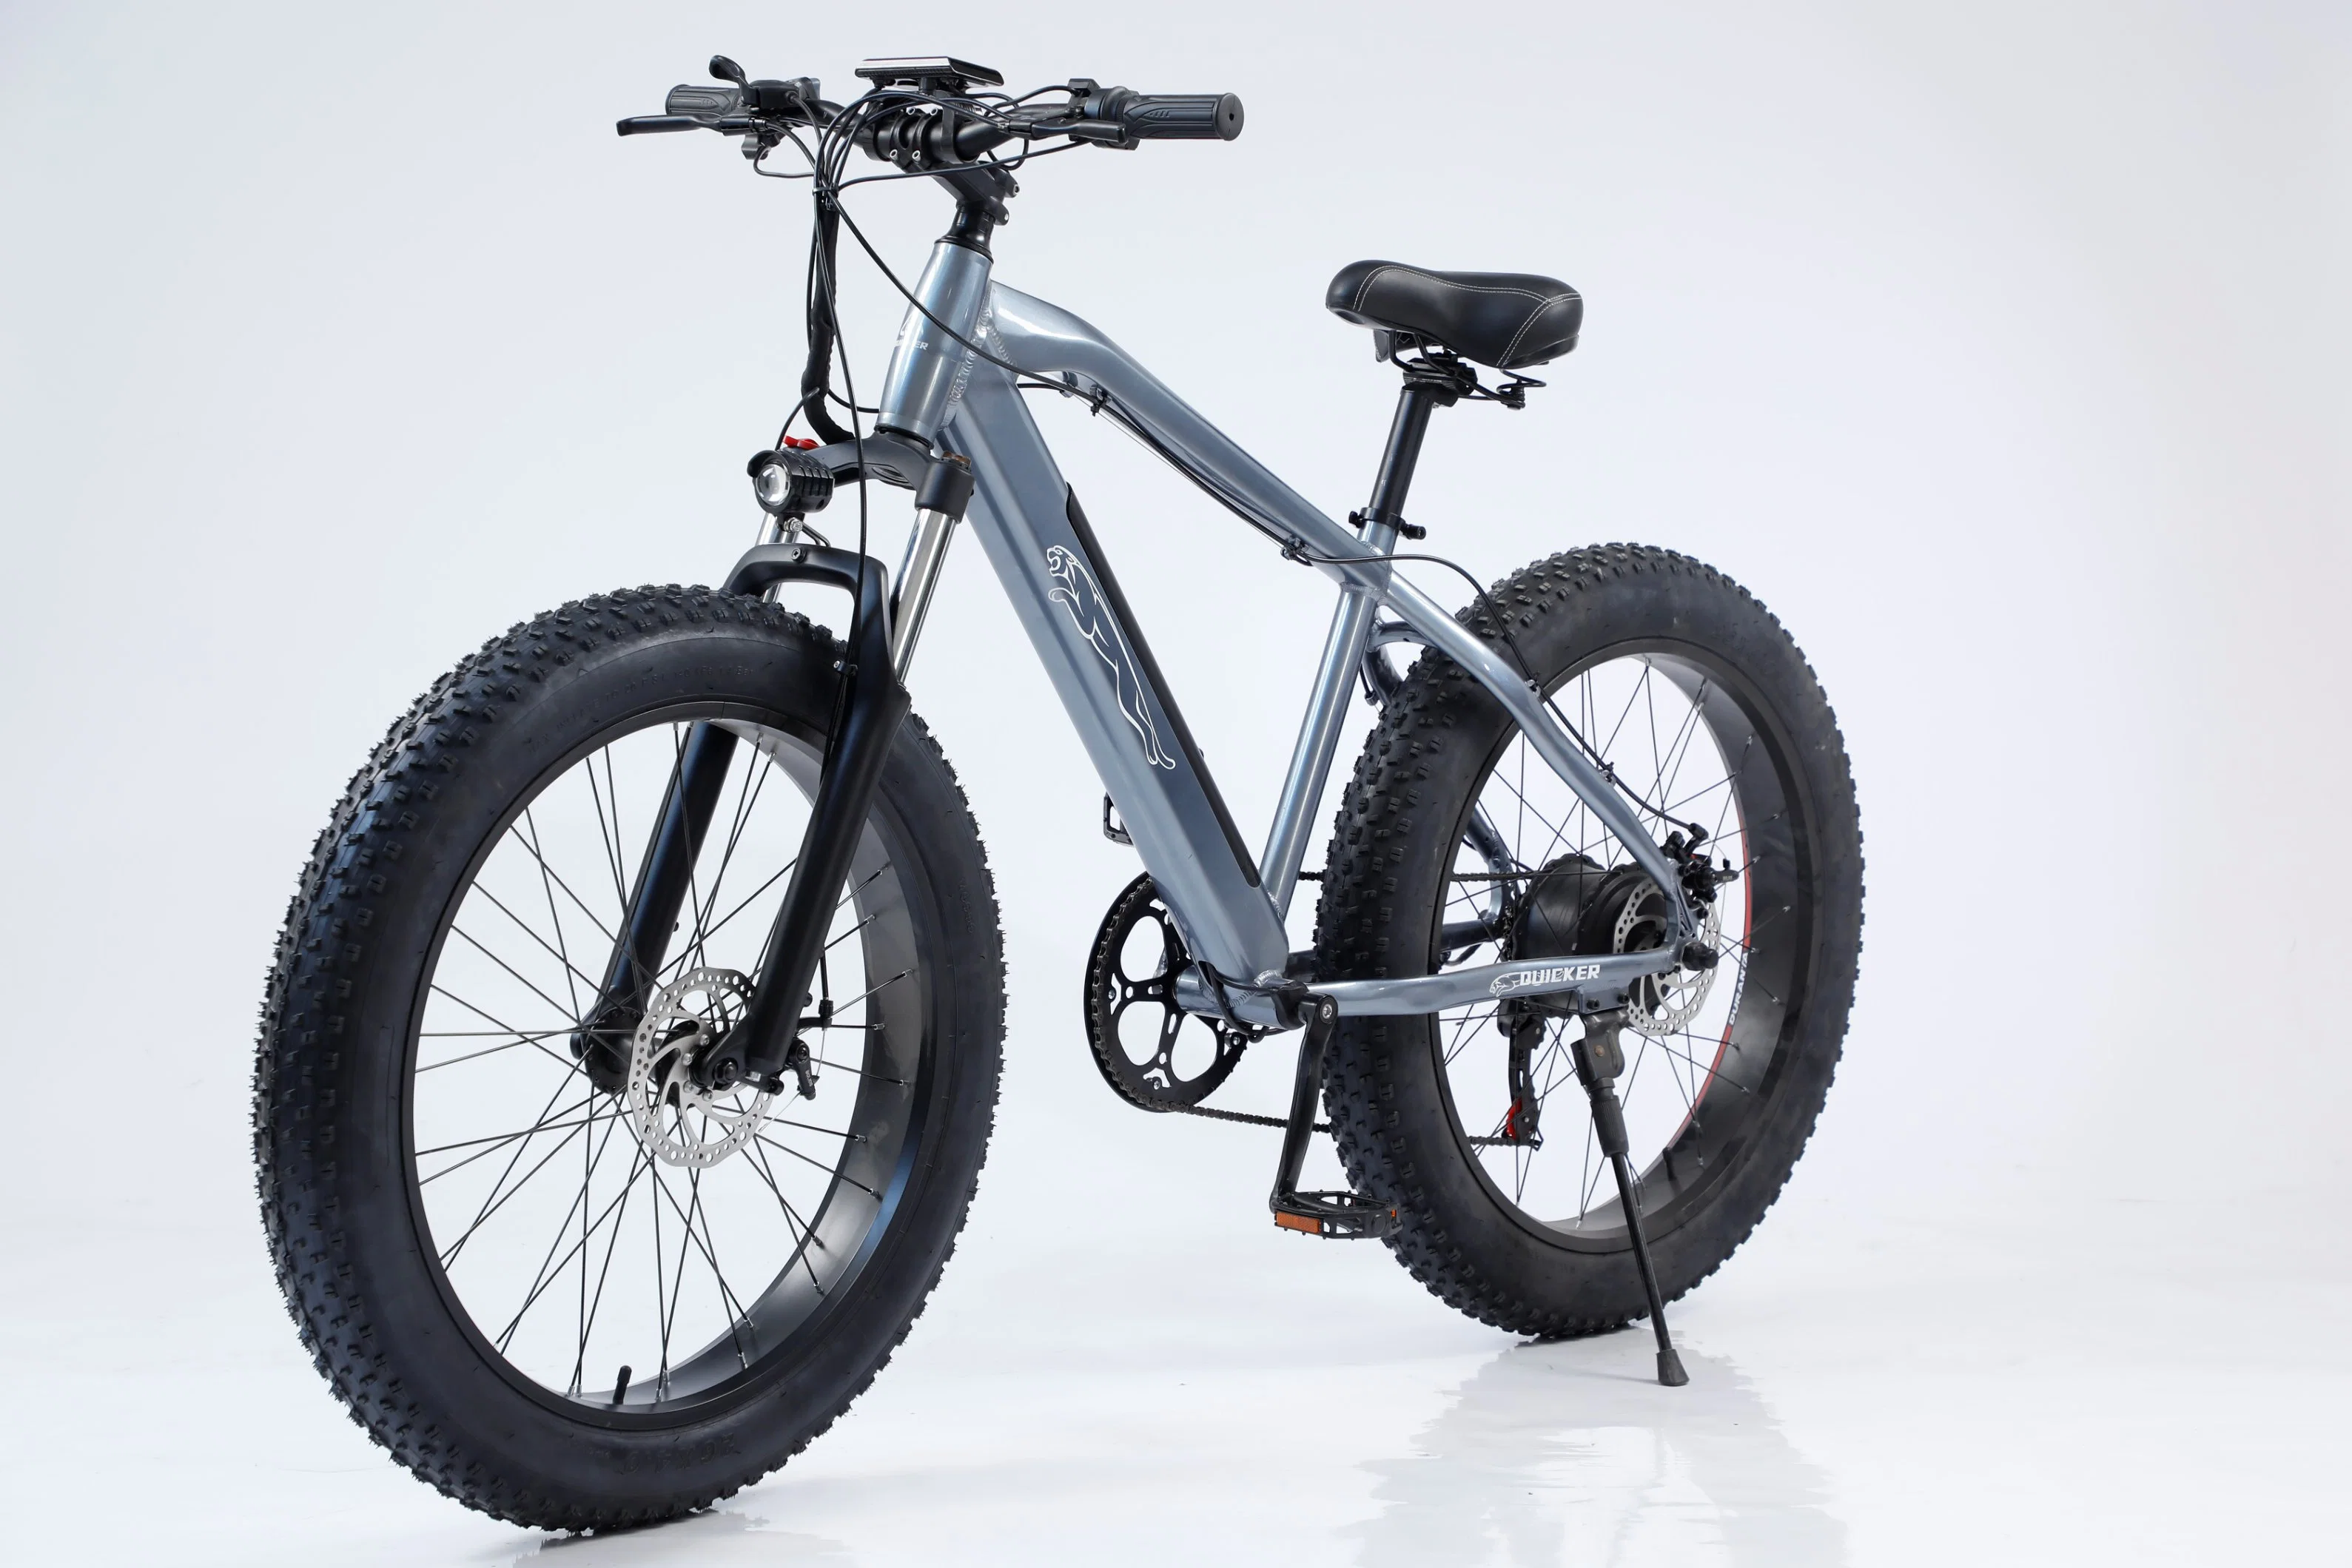 Factory Wholesale Men's MTB Bicicleta Bike with 21 Speeds and Aluminum Frame